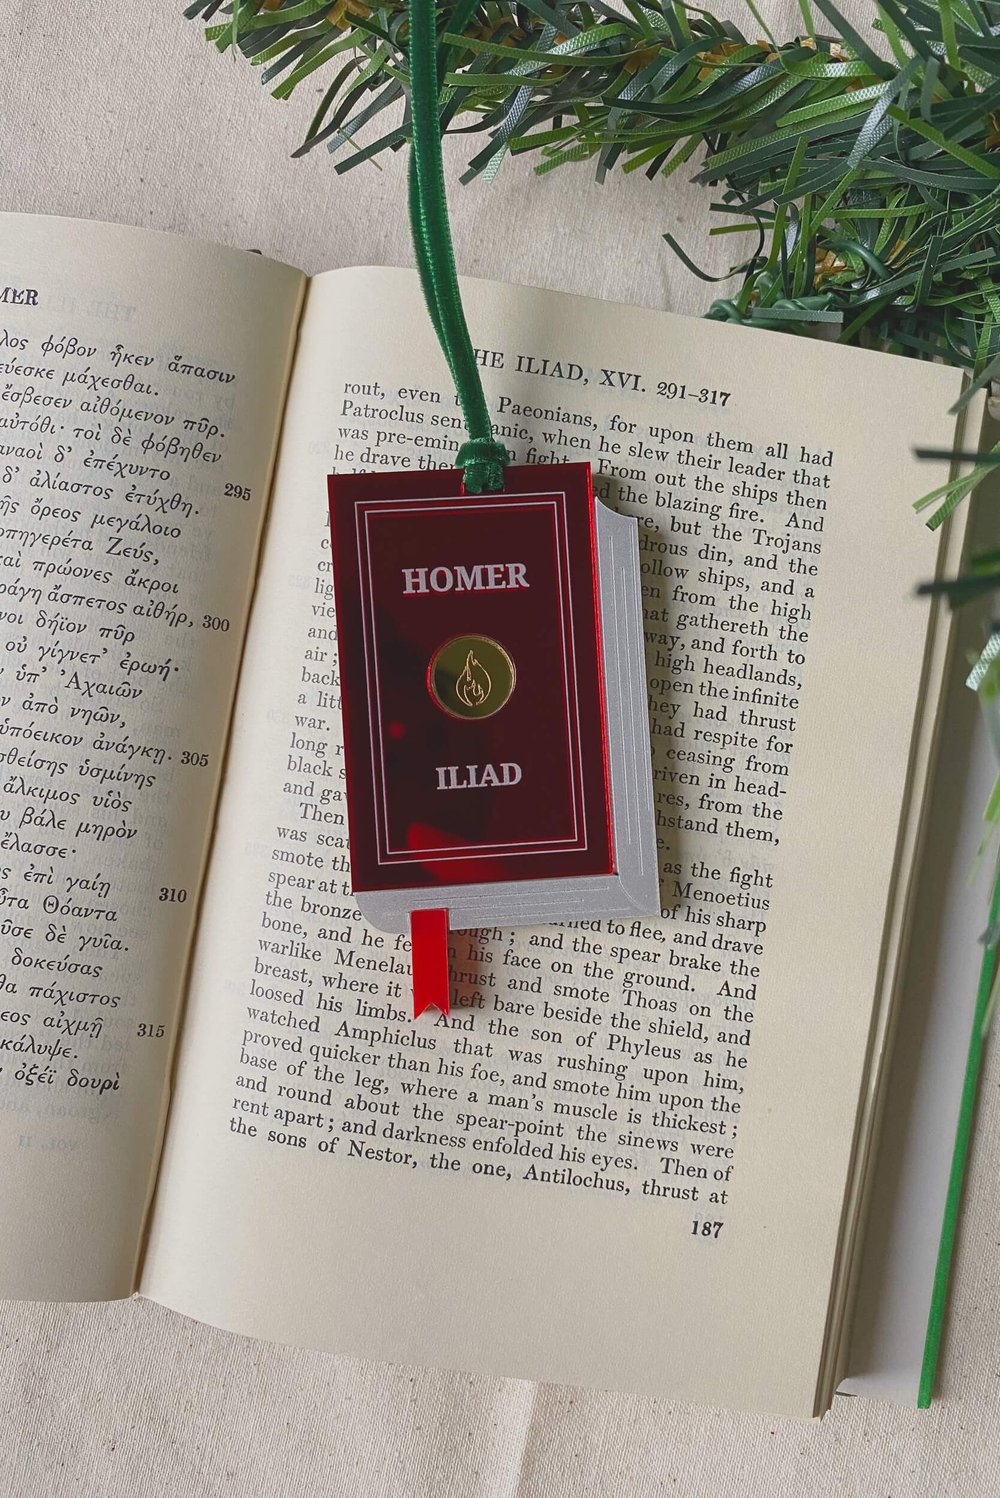 homers-iliad-book-cover-ancient-greek-literature-christmas-ornament-book-platos-fire.jpg